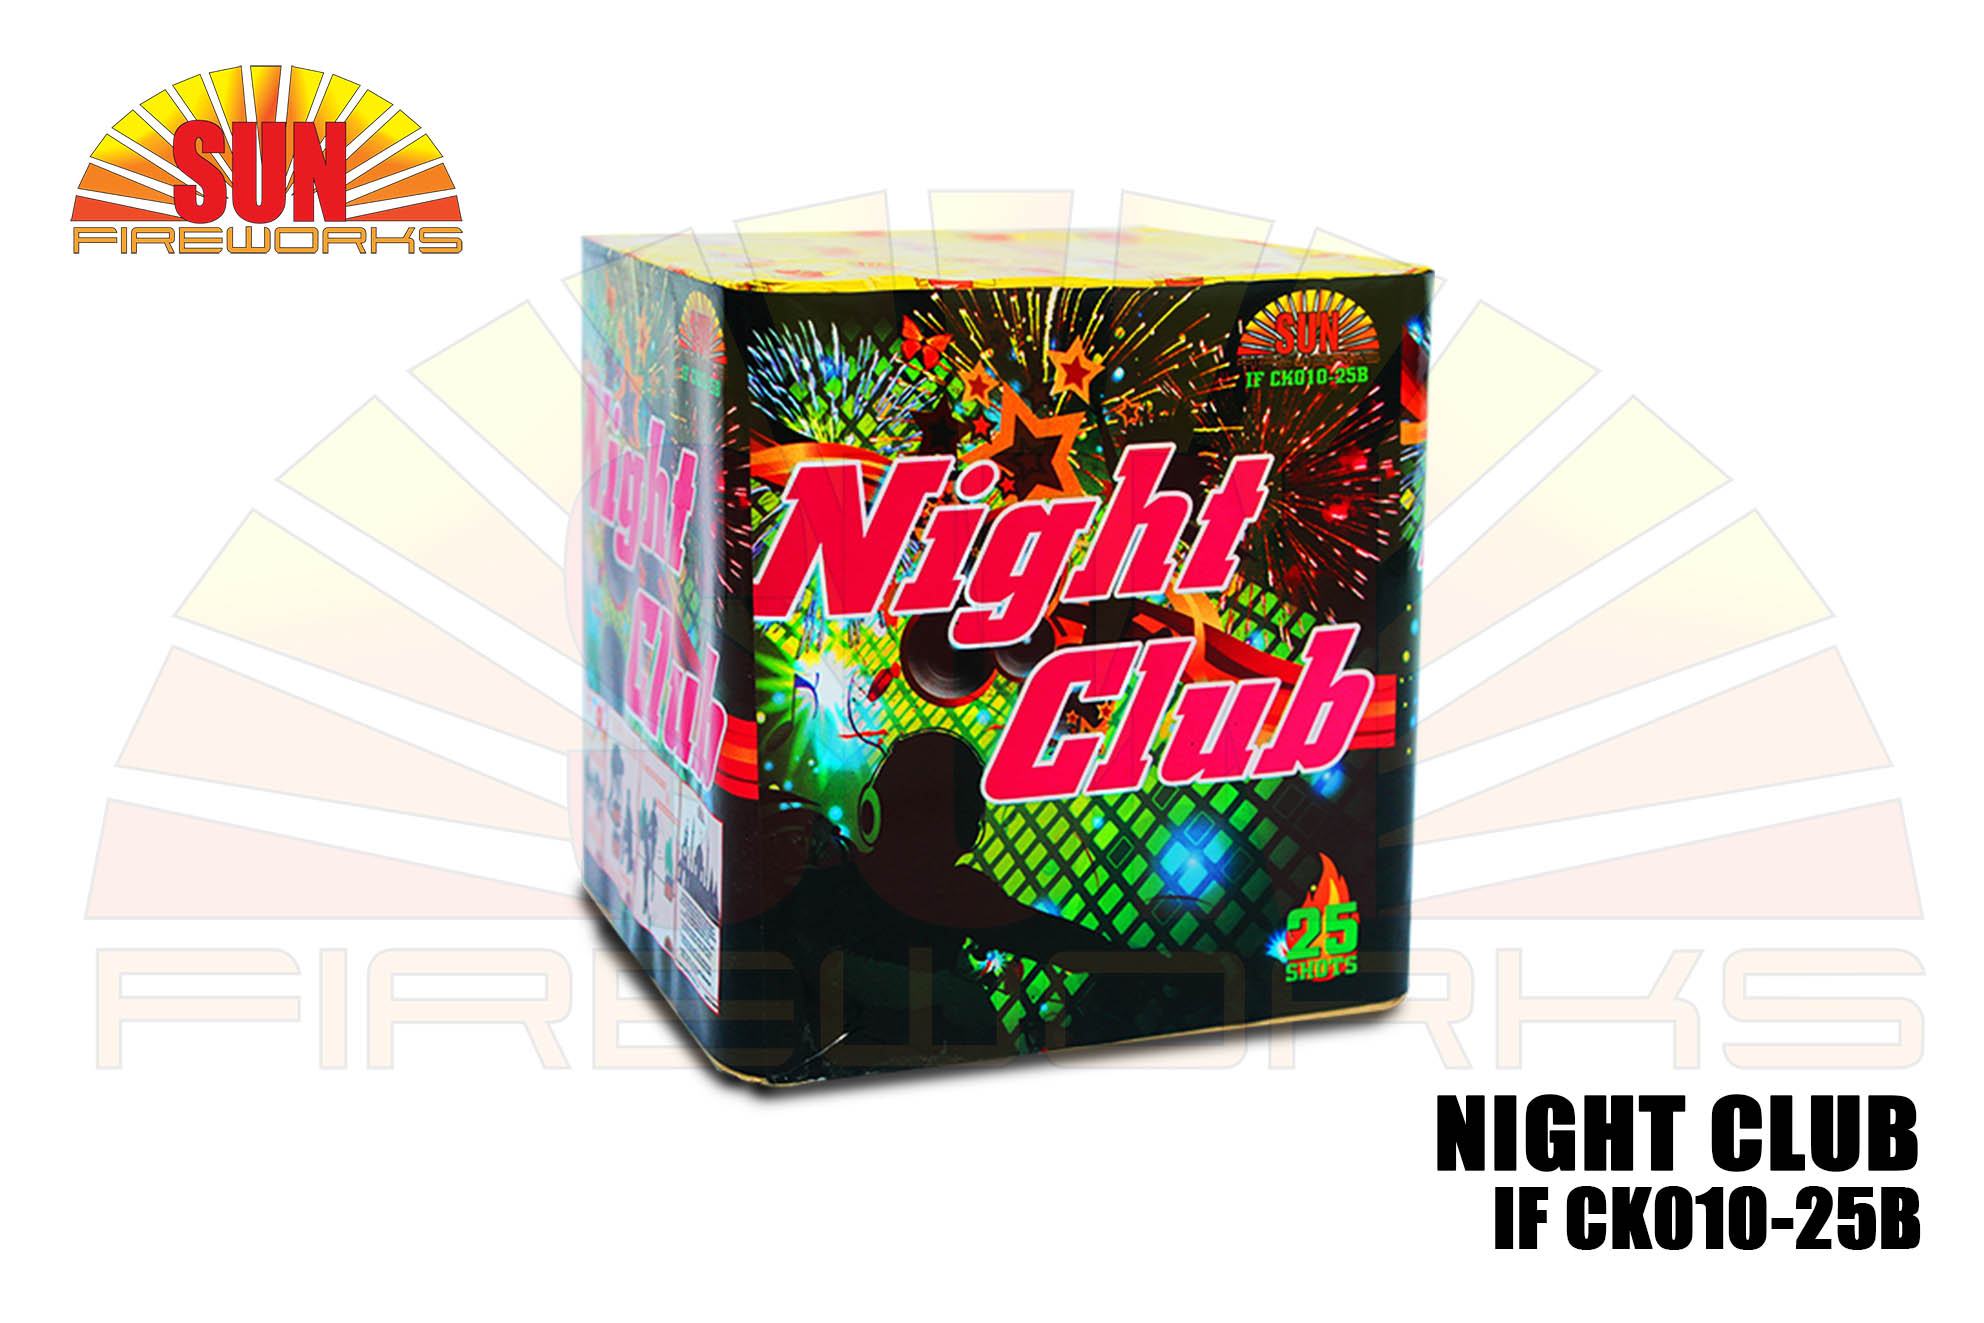 NIGHT CLUB IF CK010-25B